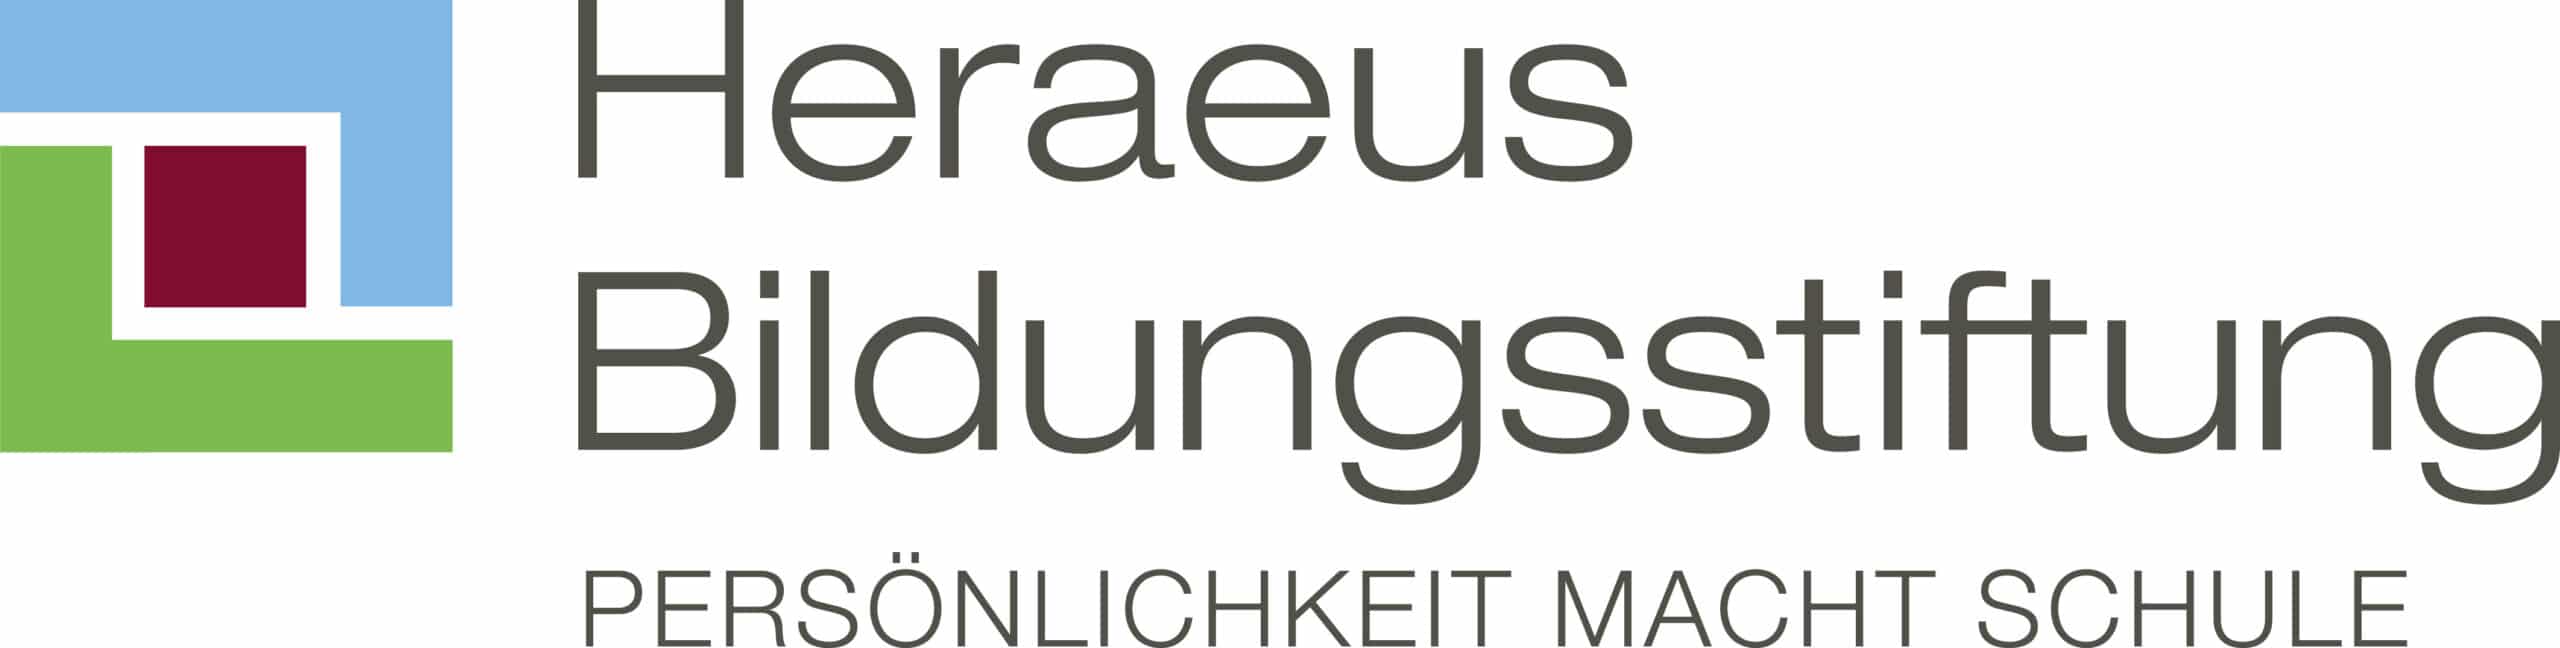 Heraeus Bildungsstiftung Logo